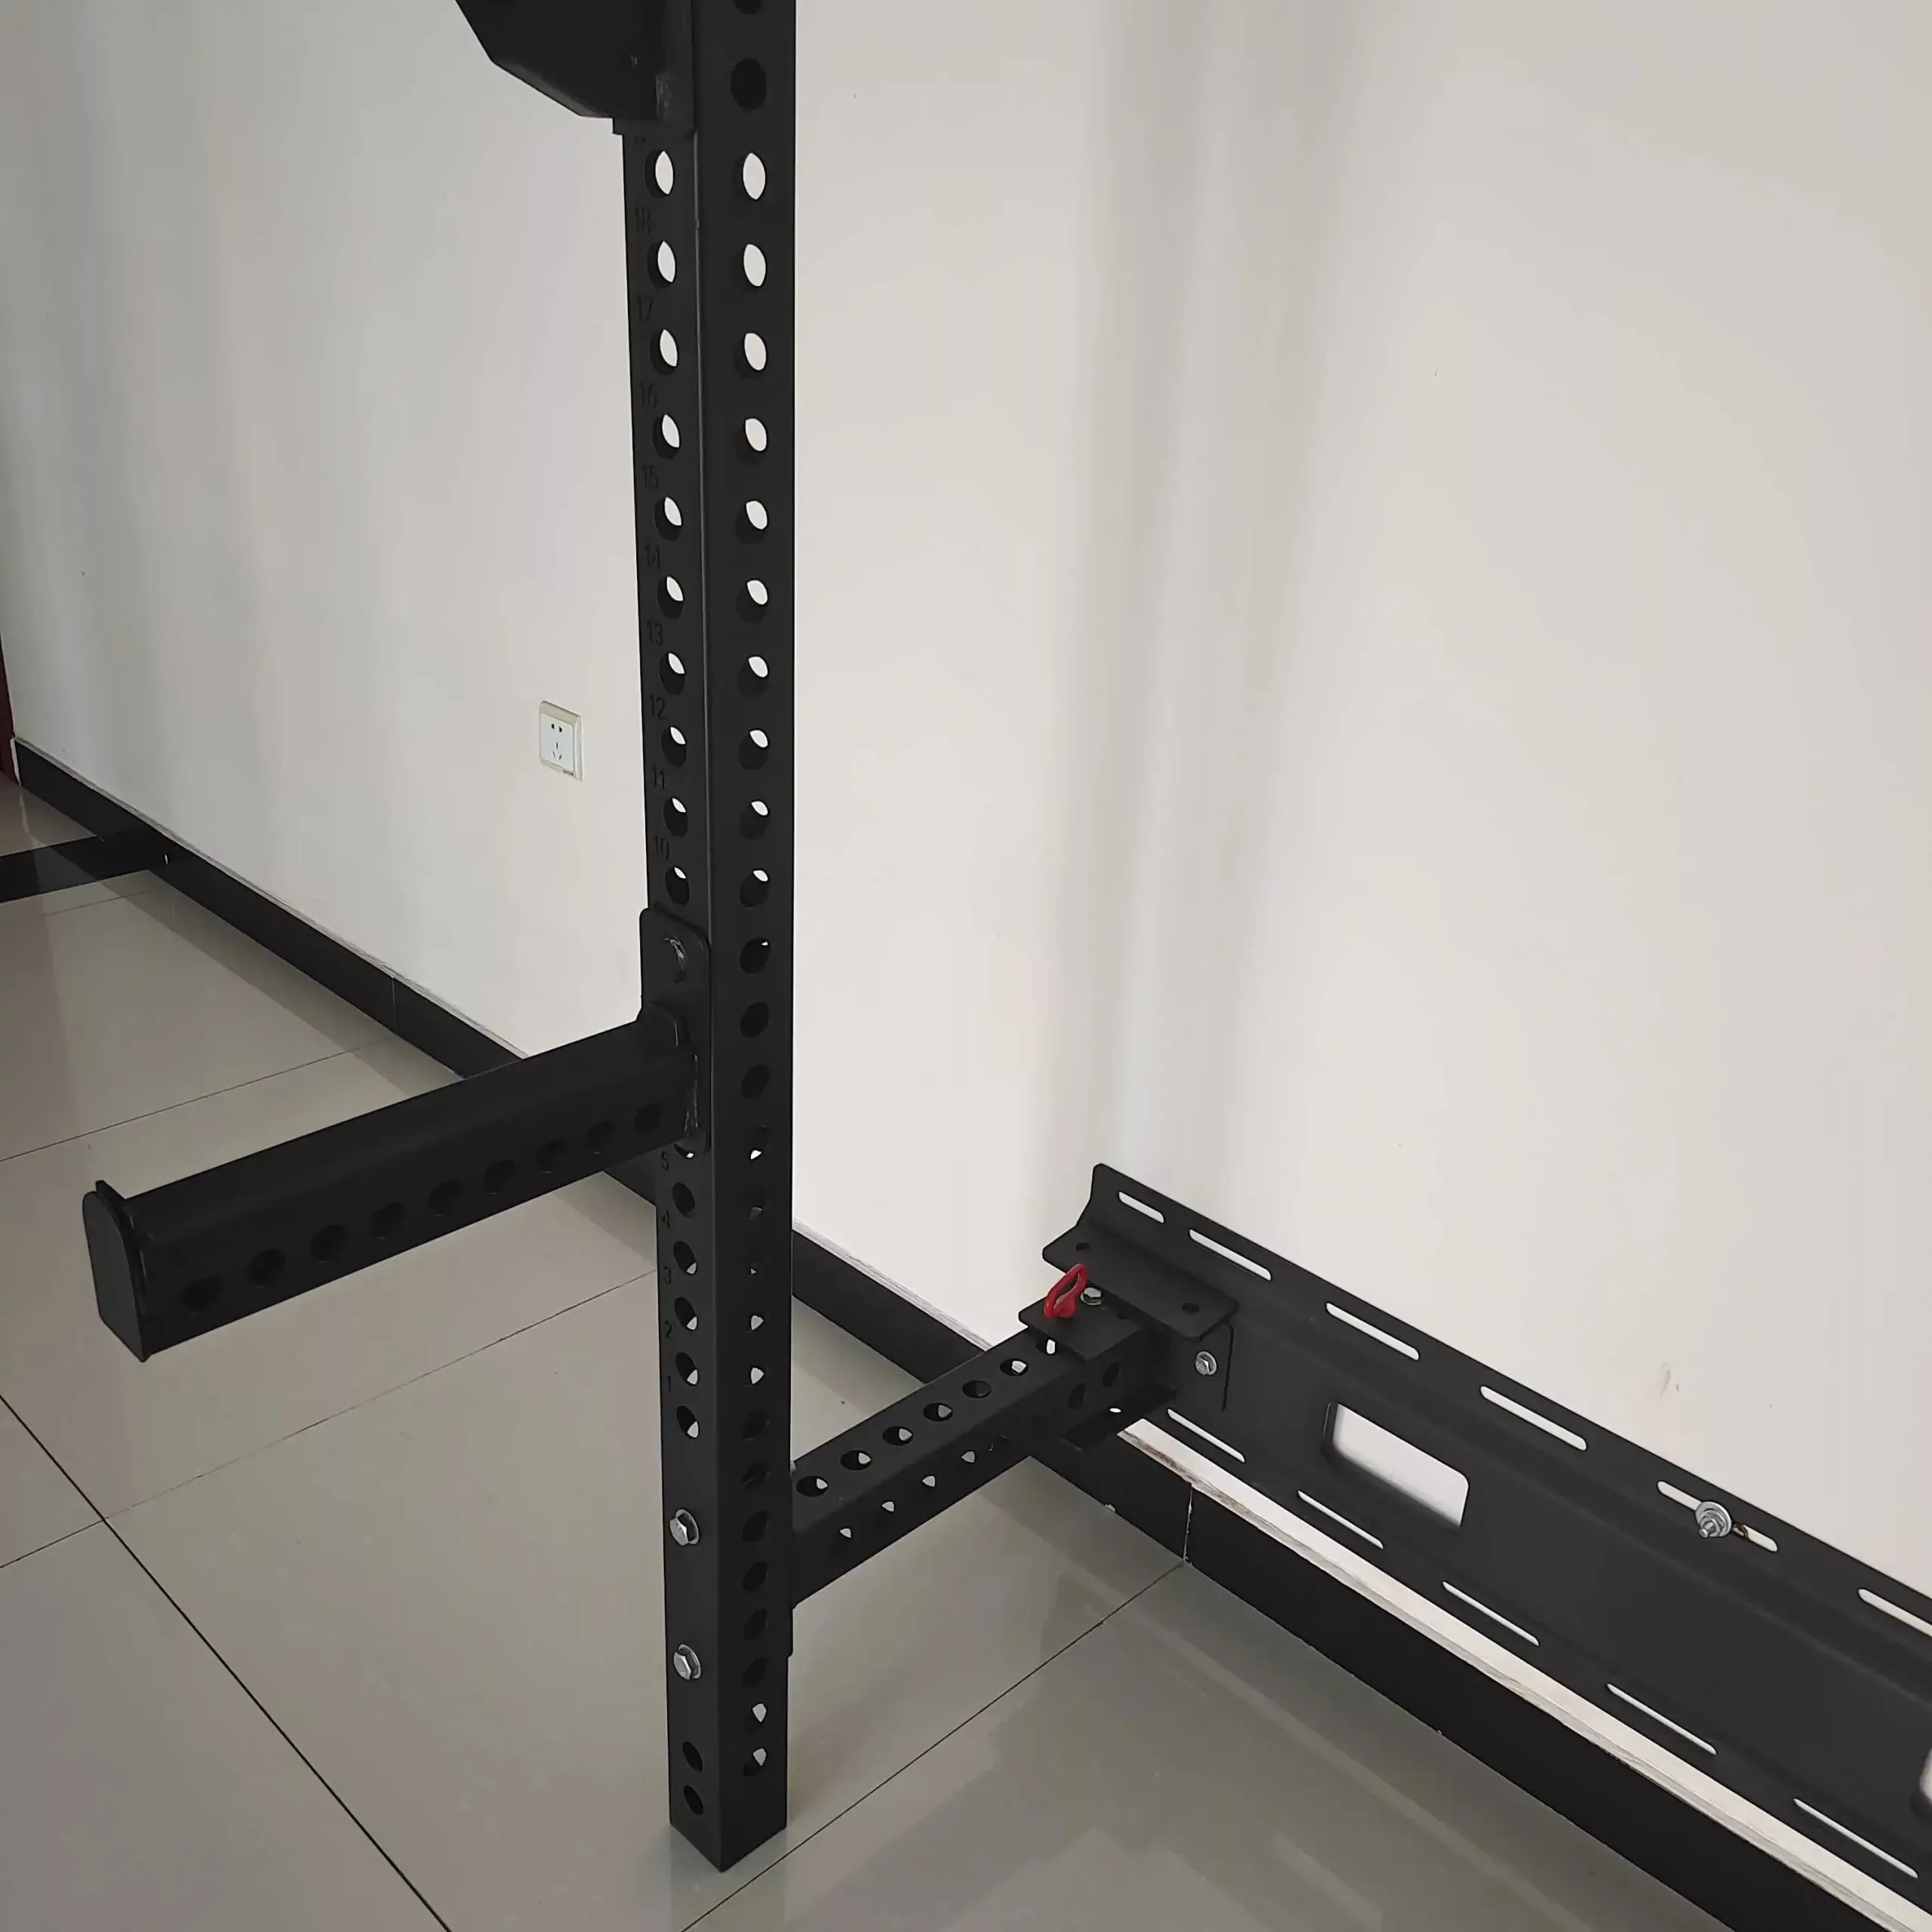 TXL-002 Best Commercial Strength Training Plate Loaded Gym Equipment Squat Rack Power Rack MachineWorkout Factory